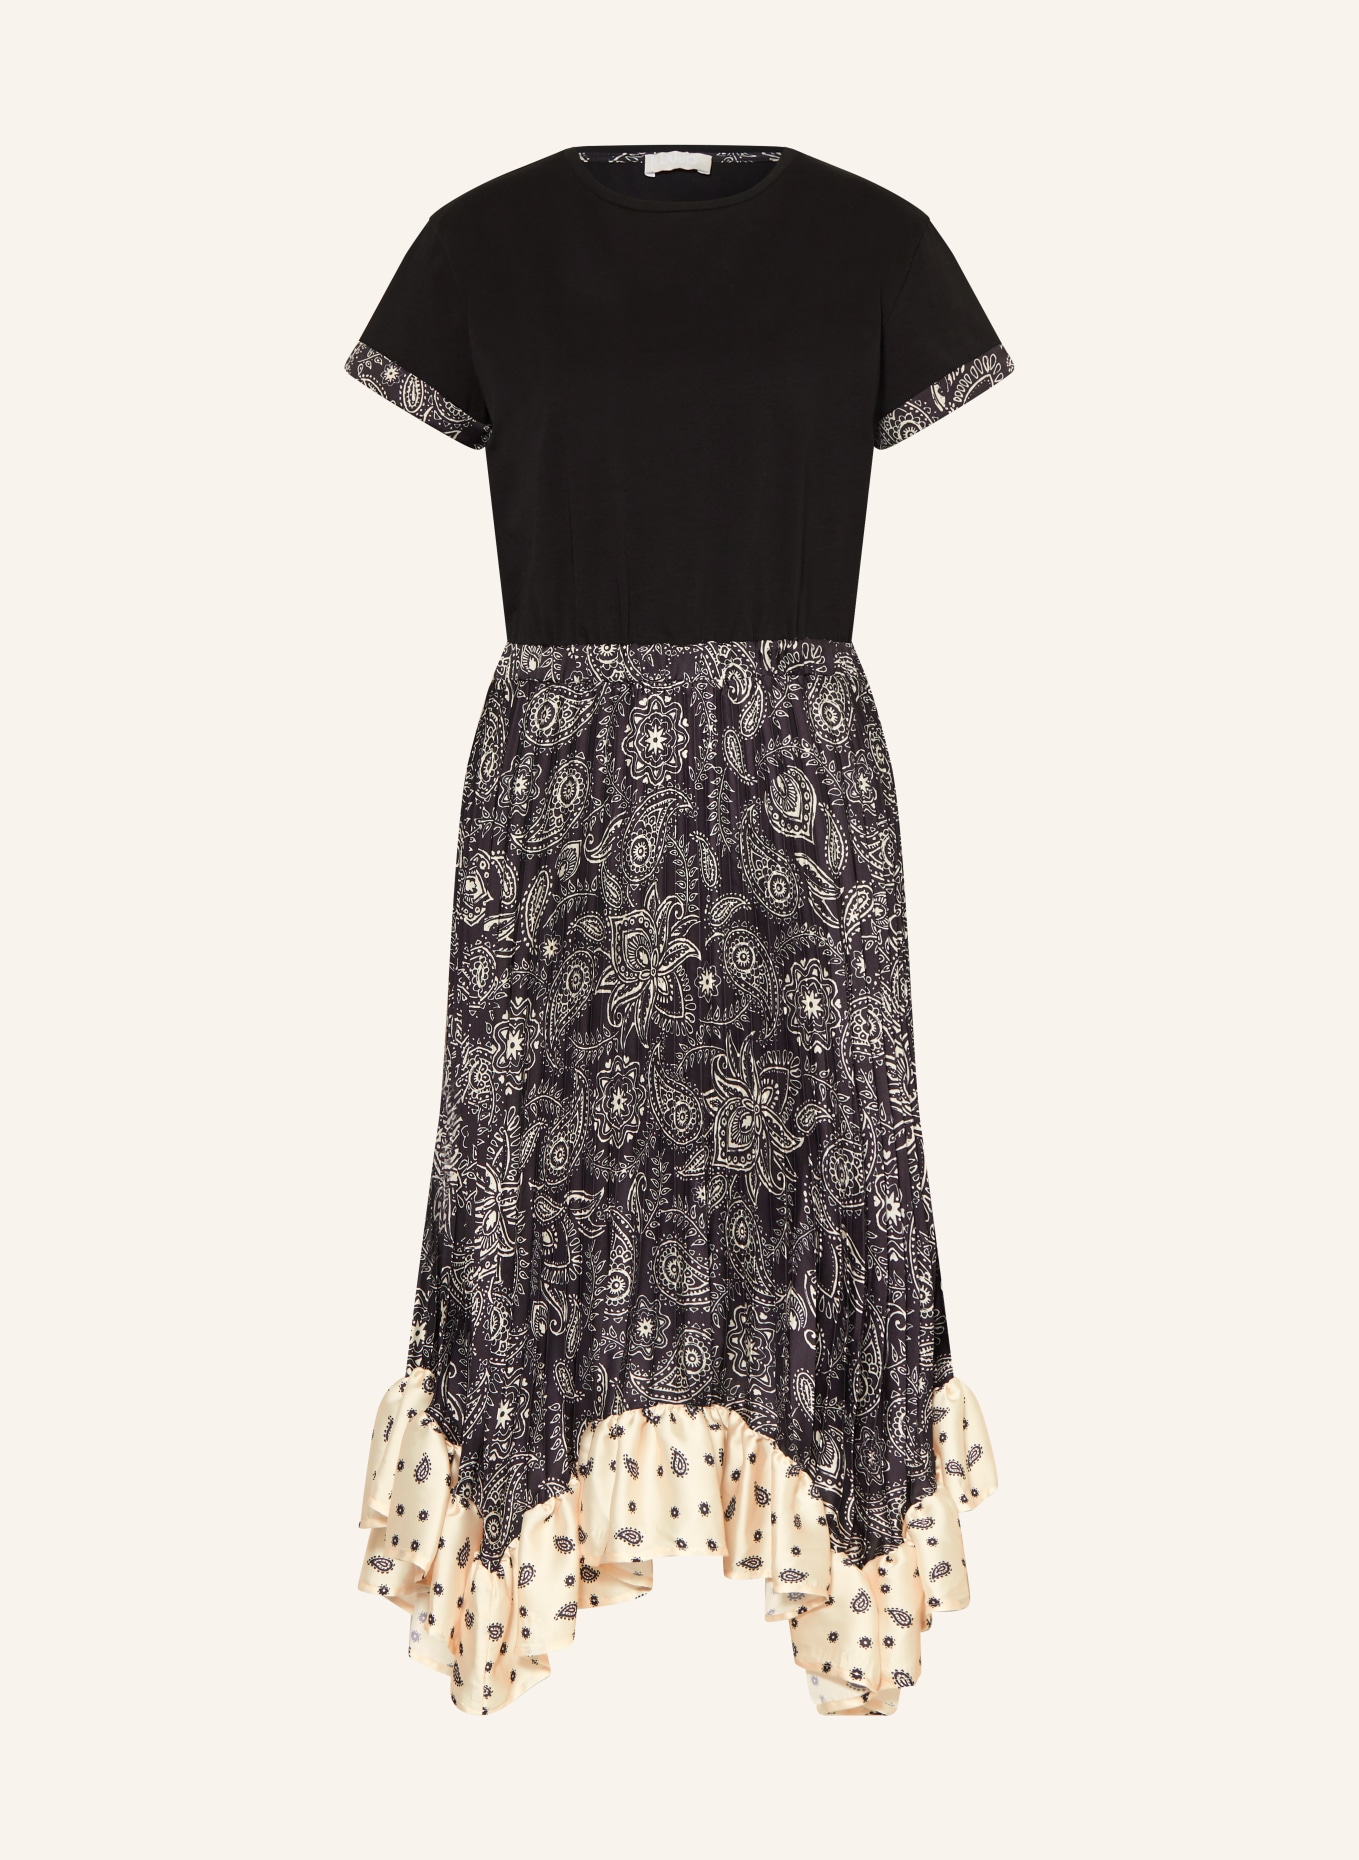 LIU JO Dress in mixed materials with pleats and frills, Color: BLACK/ ECRU (Image 1)